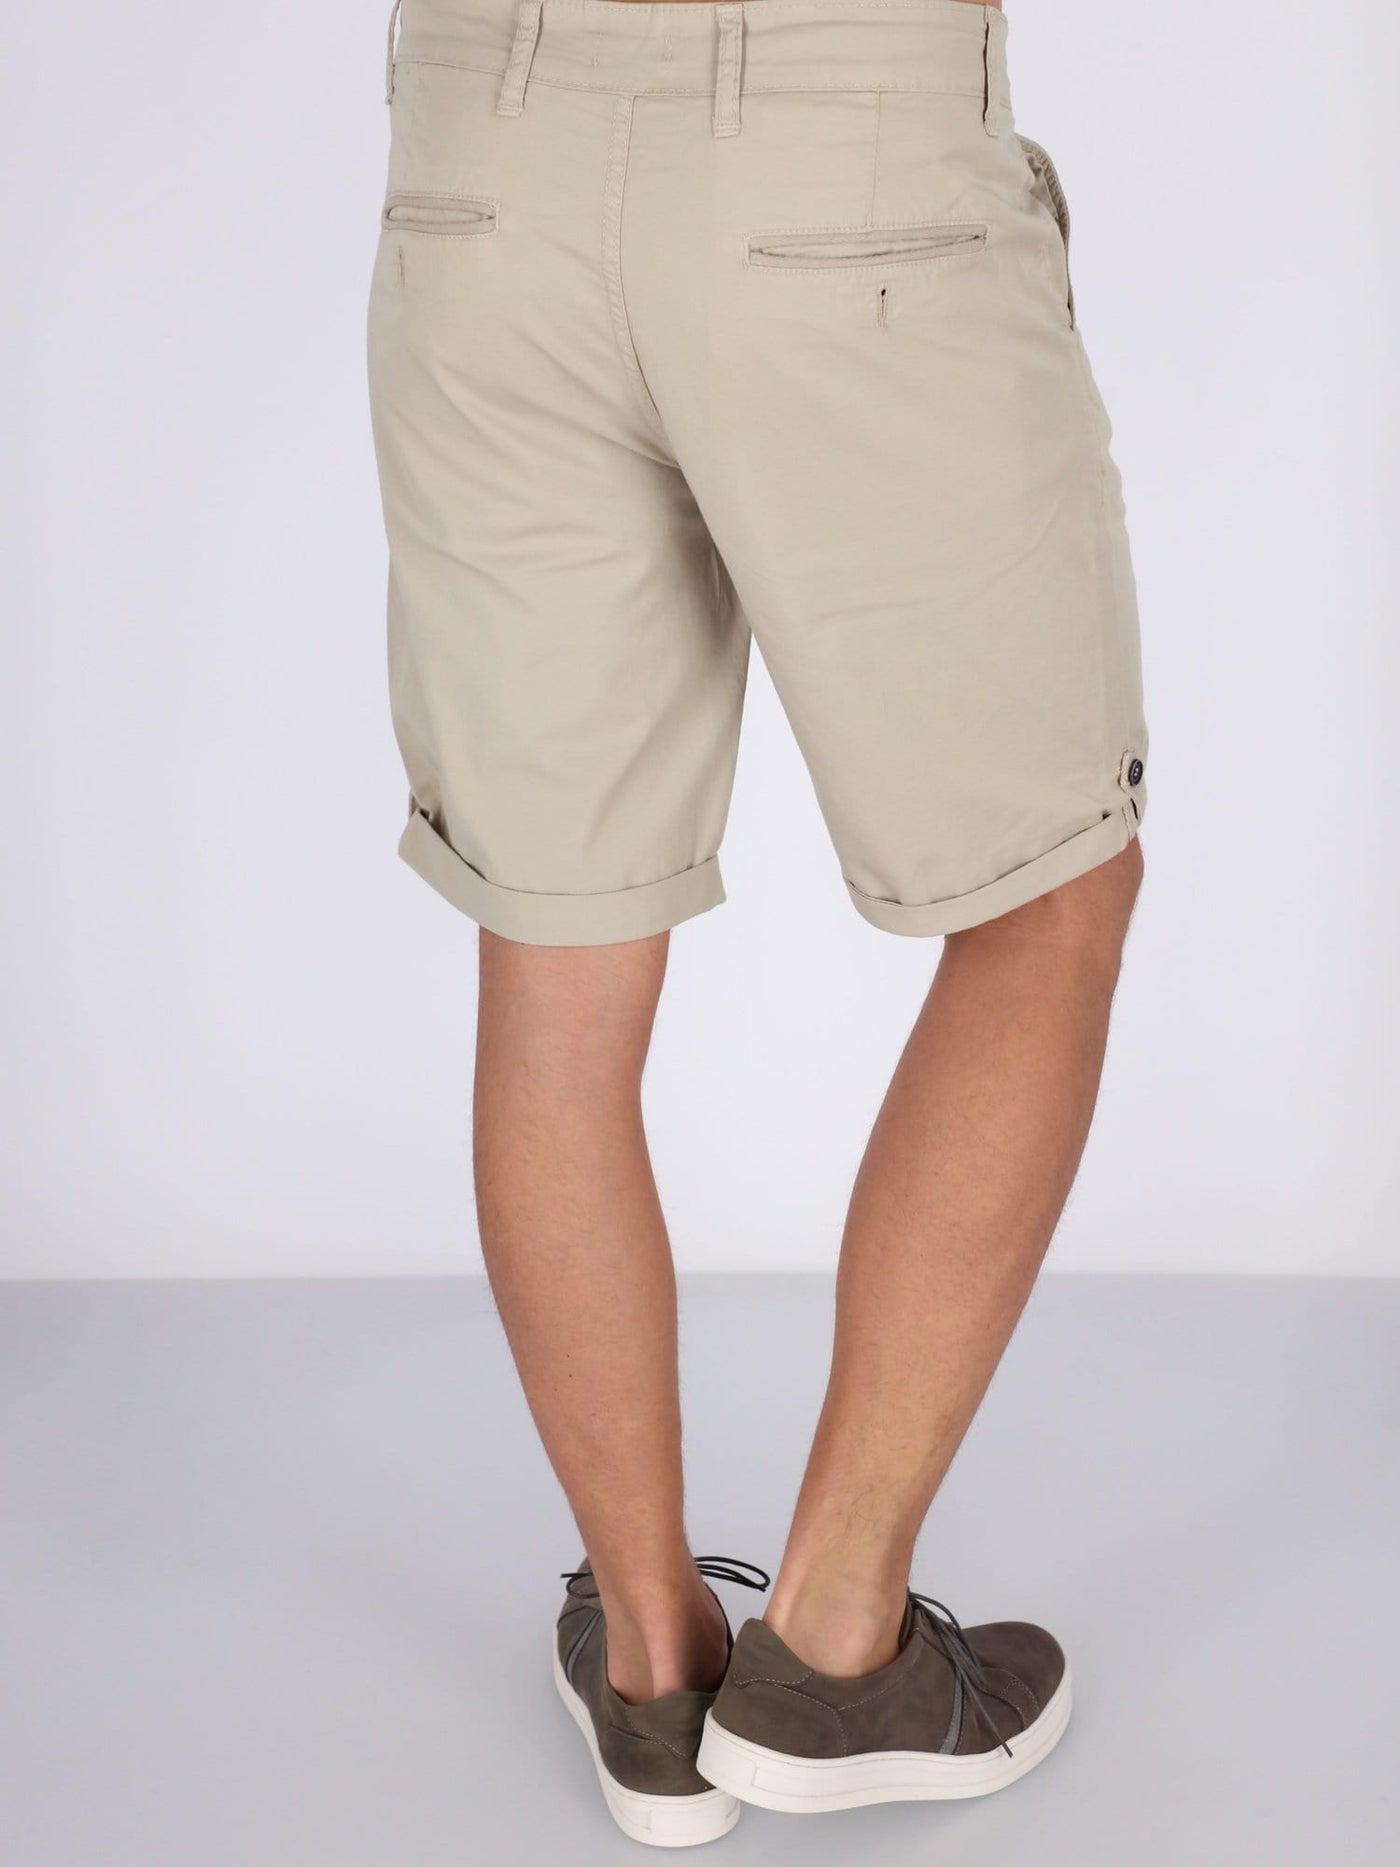 OR Pants & Shorts Flat Front Regular Fit Shorts